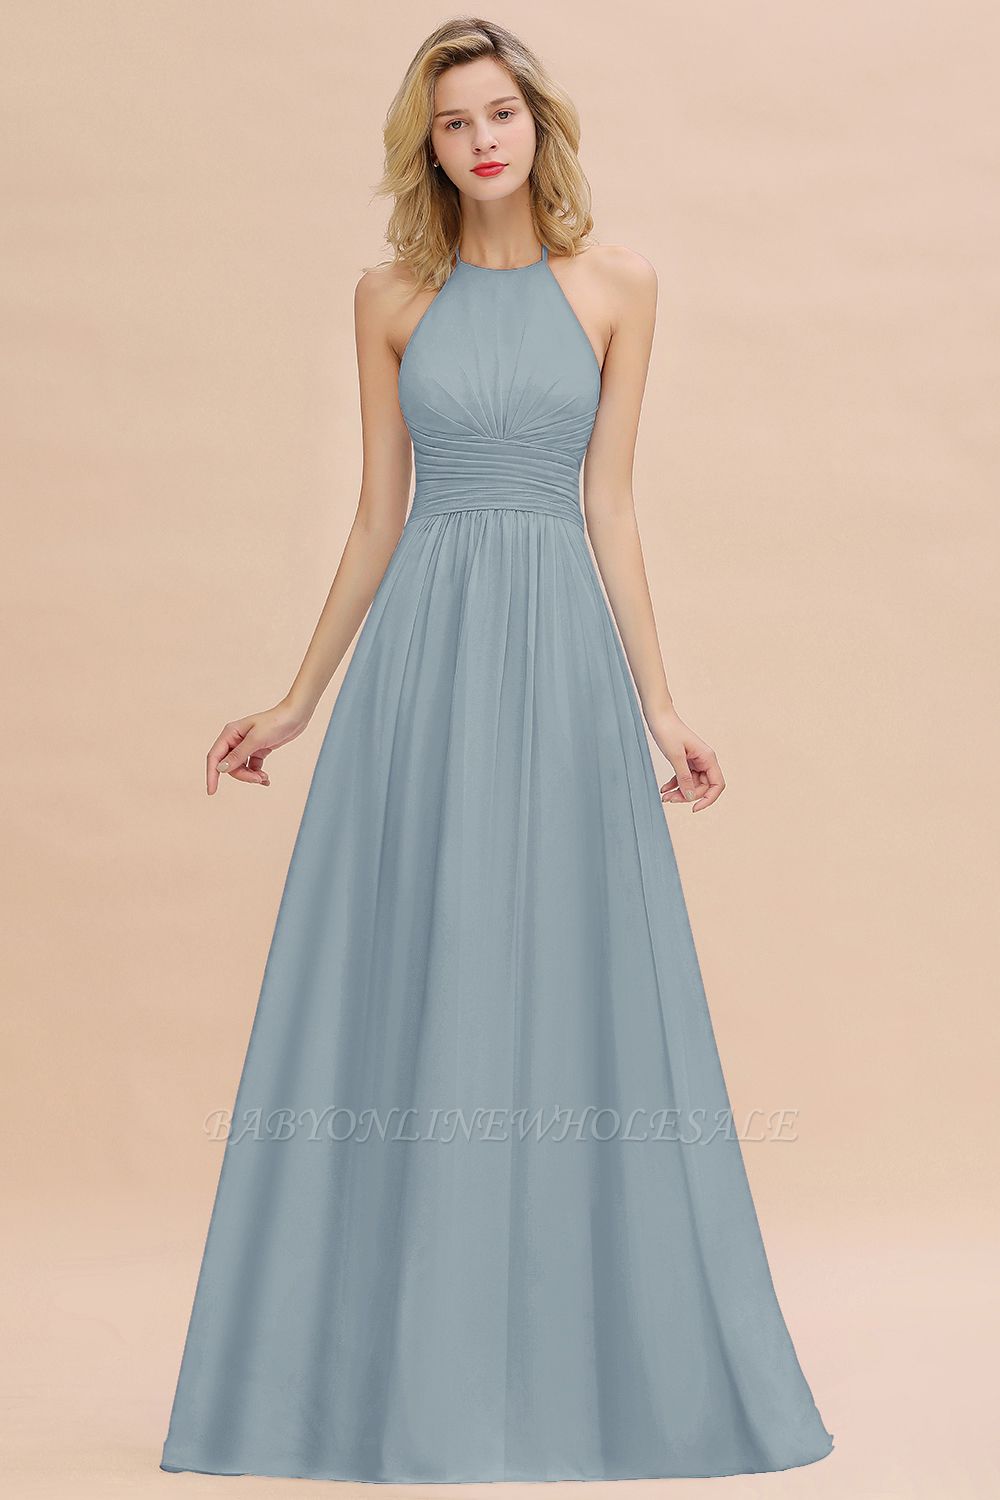 Stylish Sky Blue Halter Soft Chiffon Bridesmaid Dress Aline Evening Swing Dress